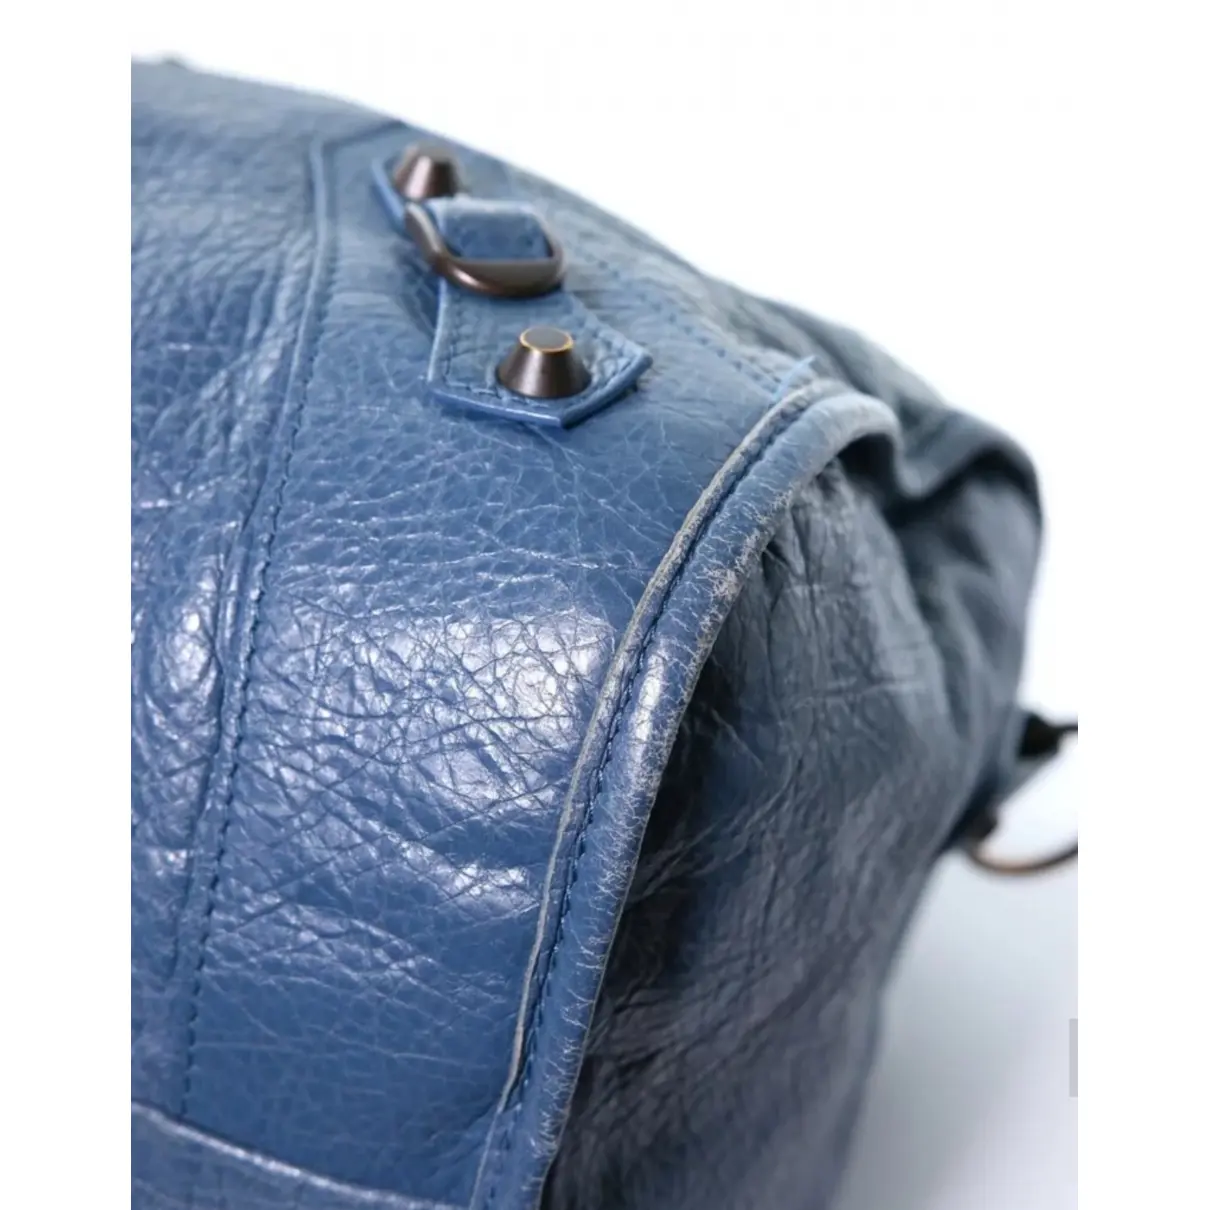 Twiggy leather handbag Balenciaga